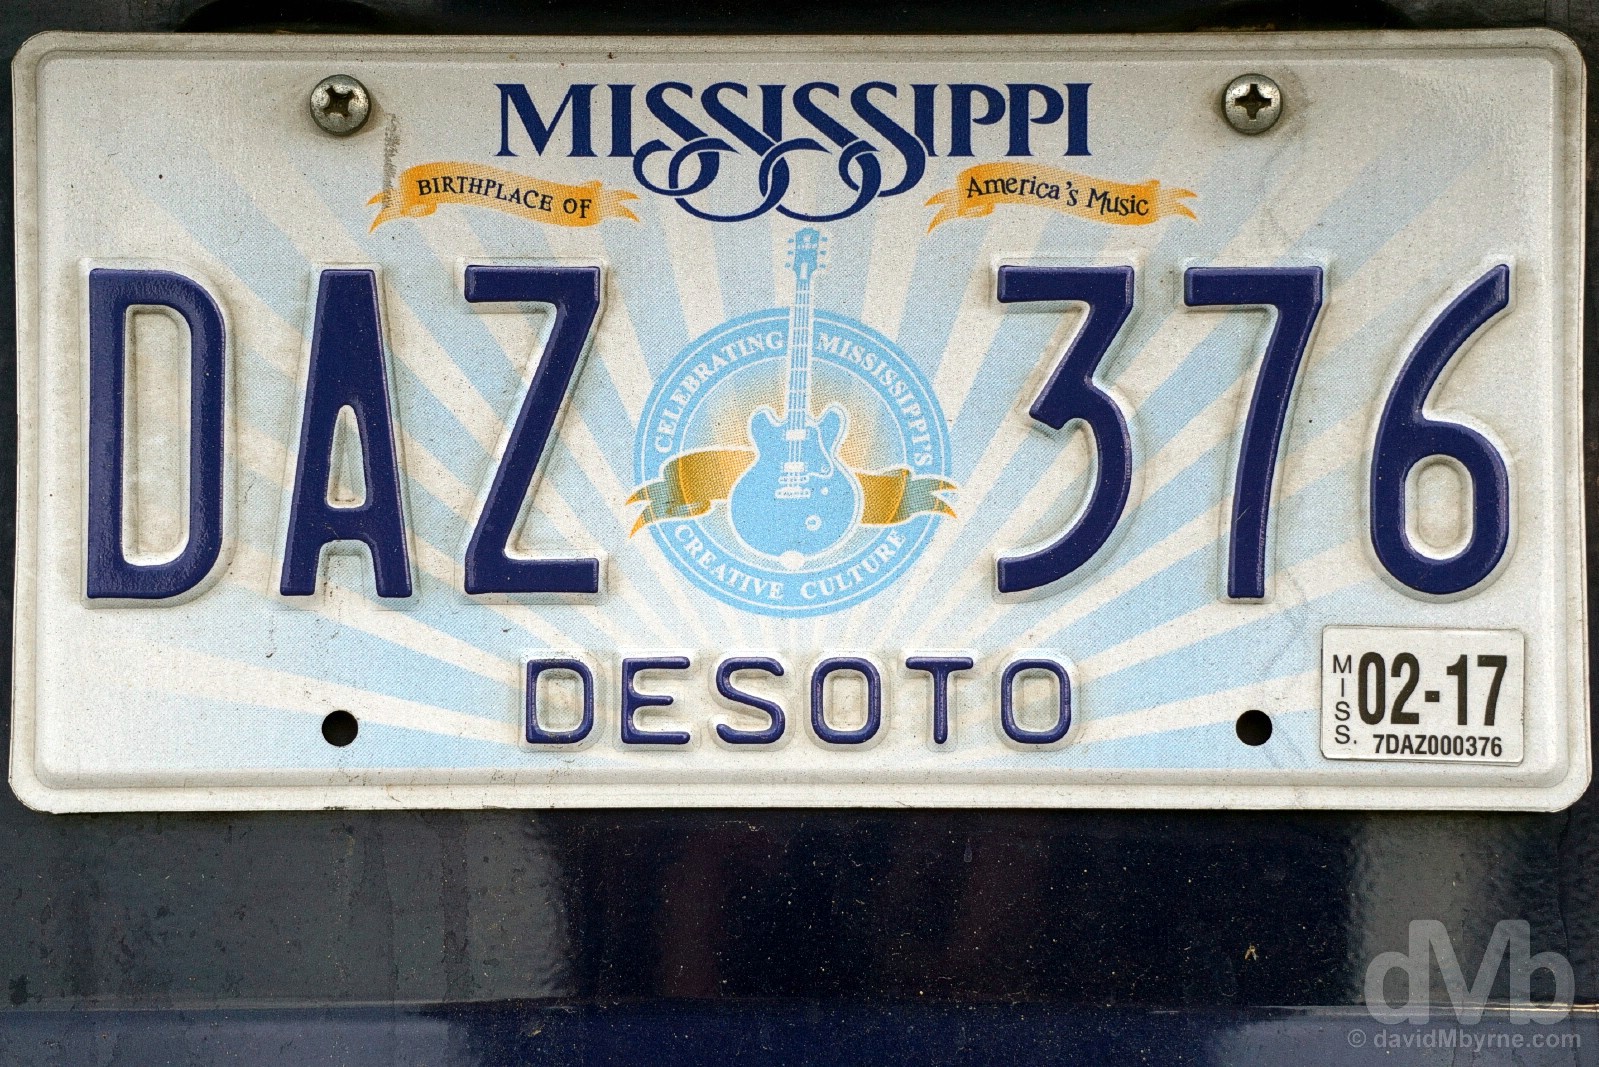 Mississippi plate. Memphis, Tennessee, USA. September 18, 2016. 